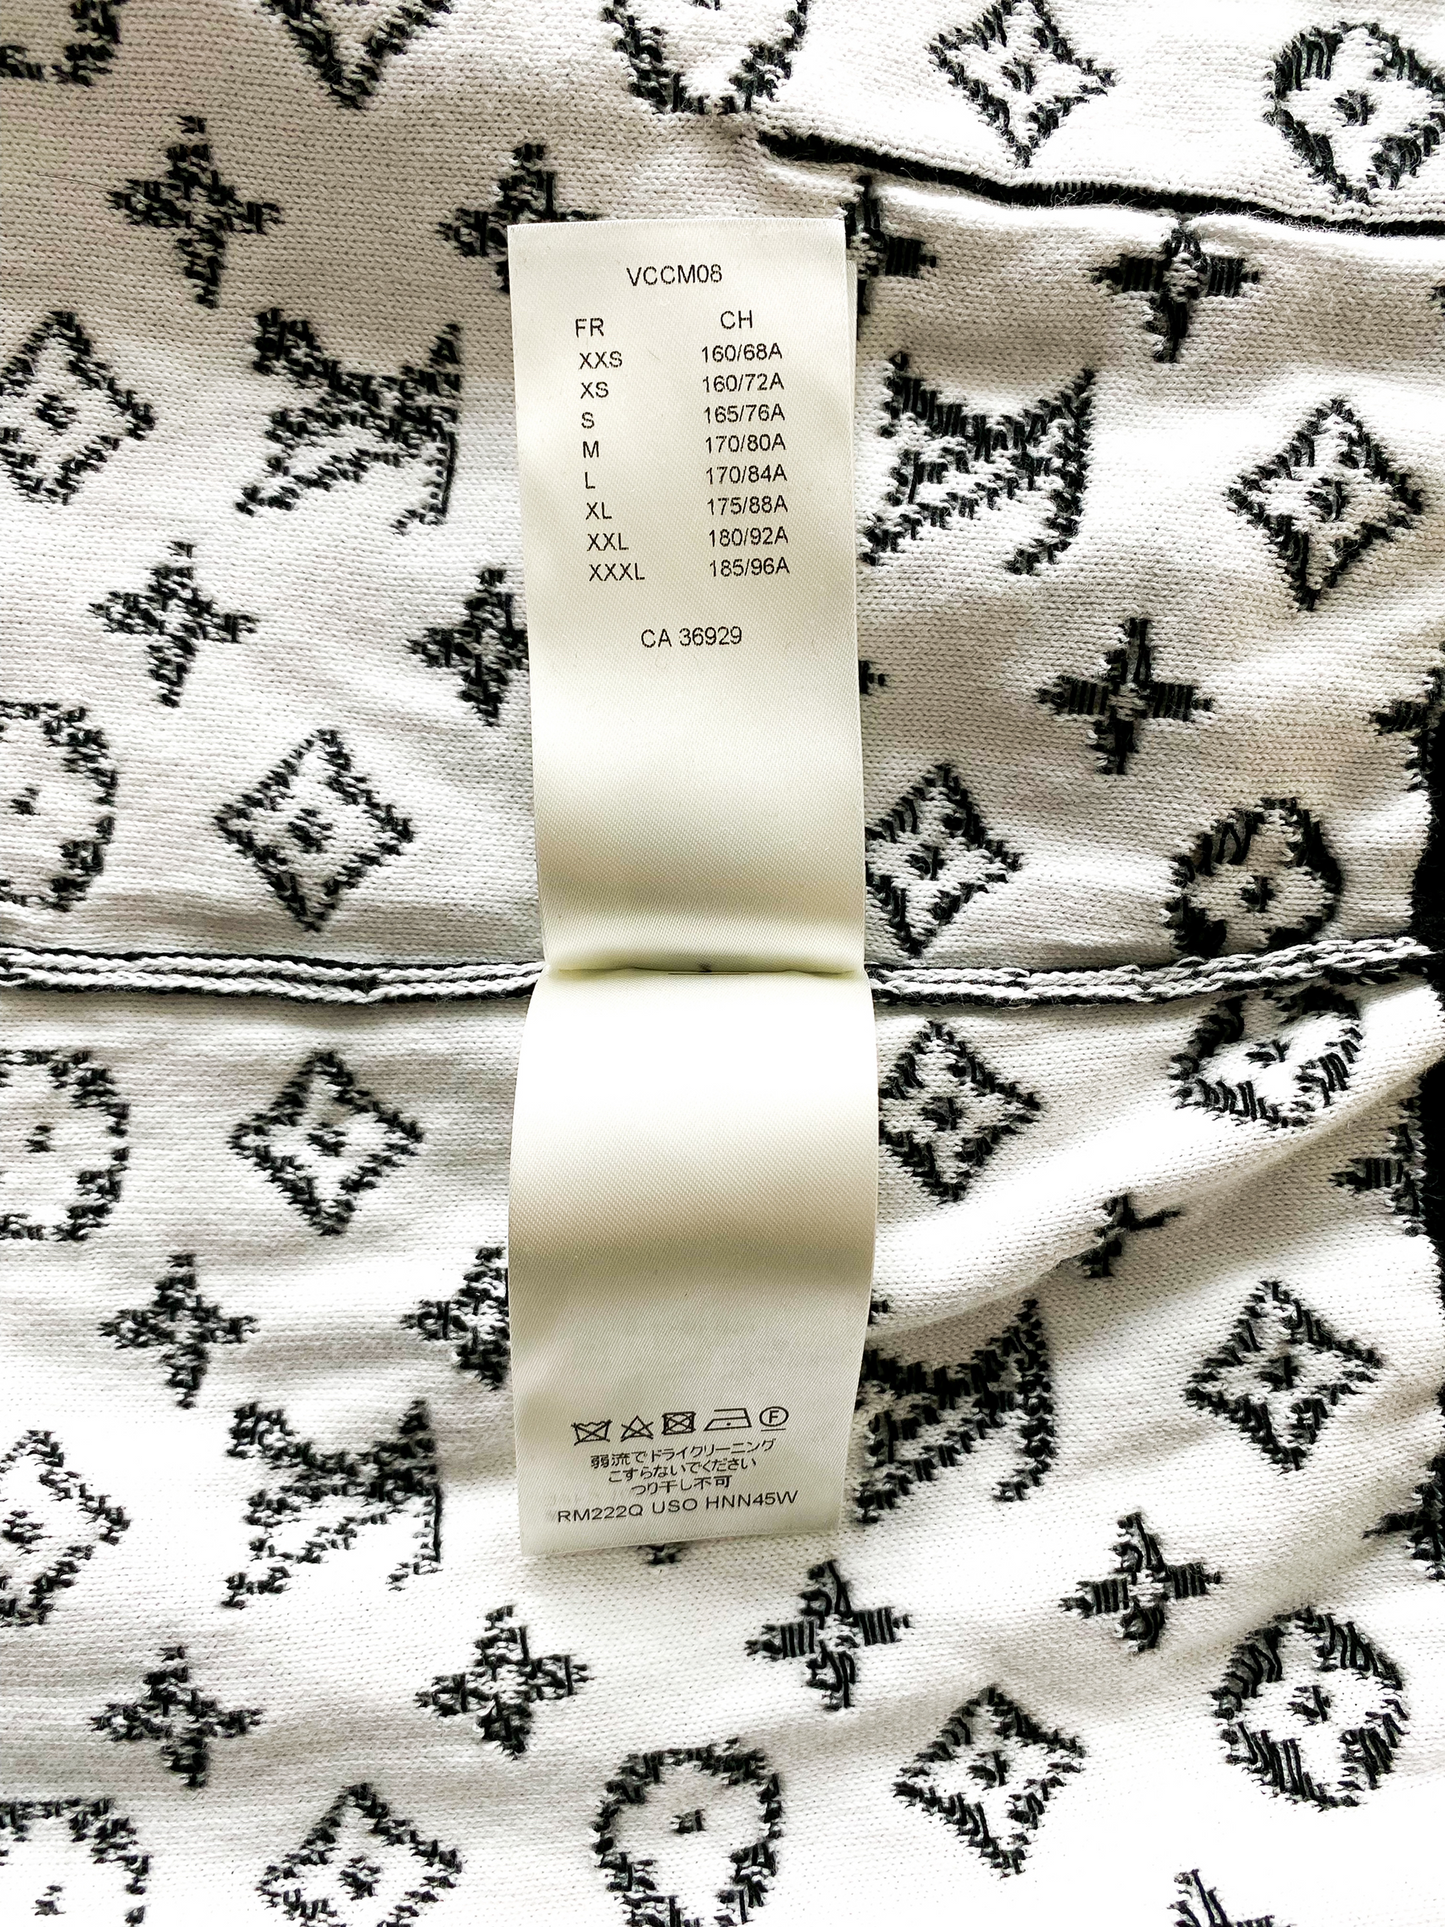 Louis Vuitton® Monogram Gradient Hoodie Black White. Size M0